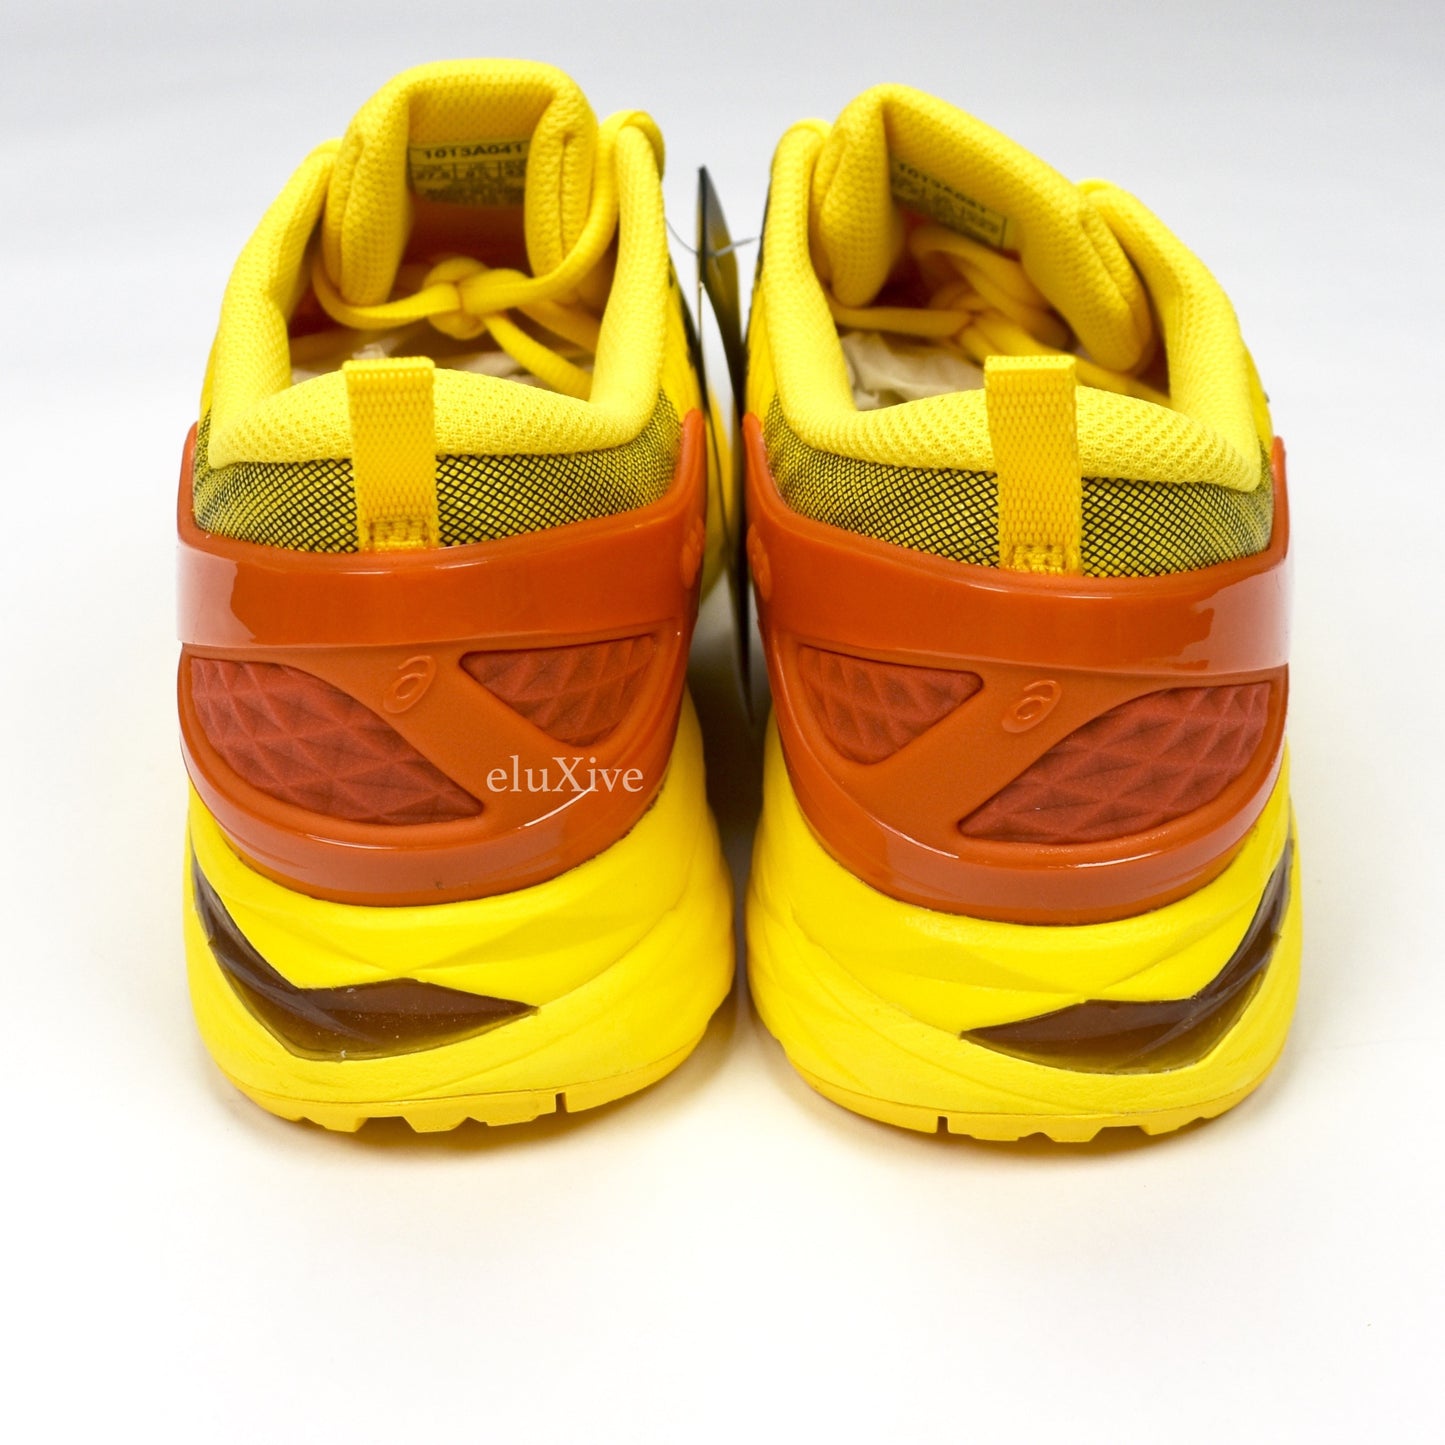 Asics x Kiko Kostadinov - Gel-Delva Sneakers (Yellow)